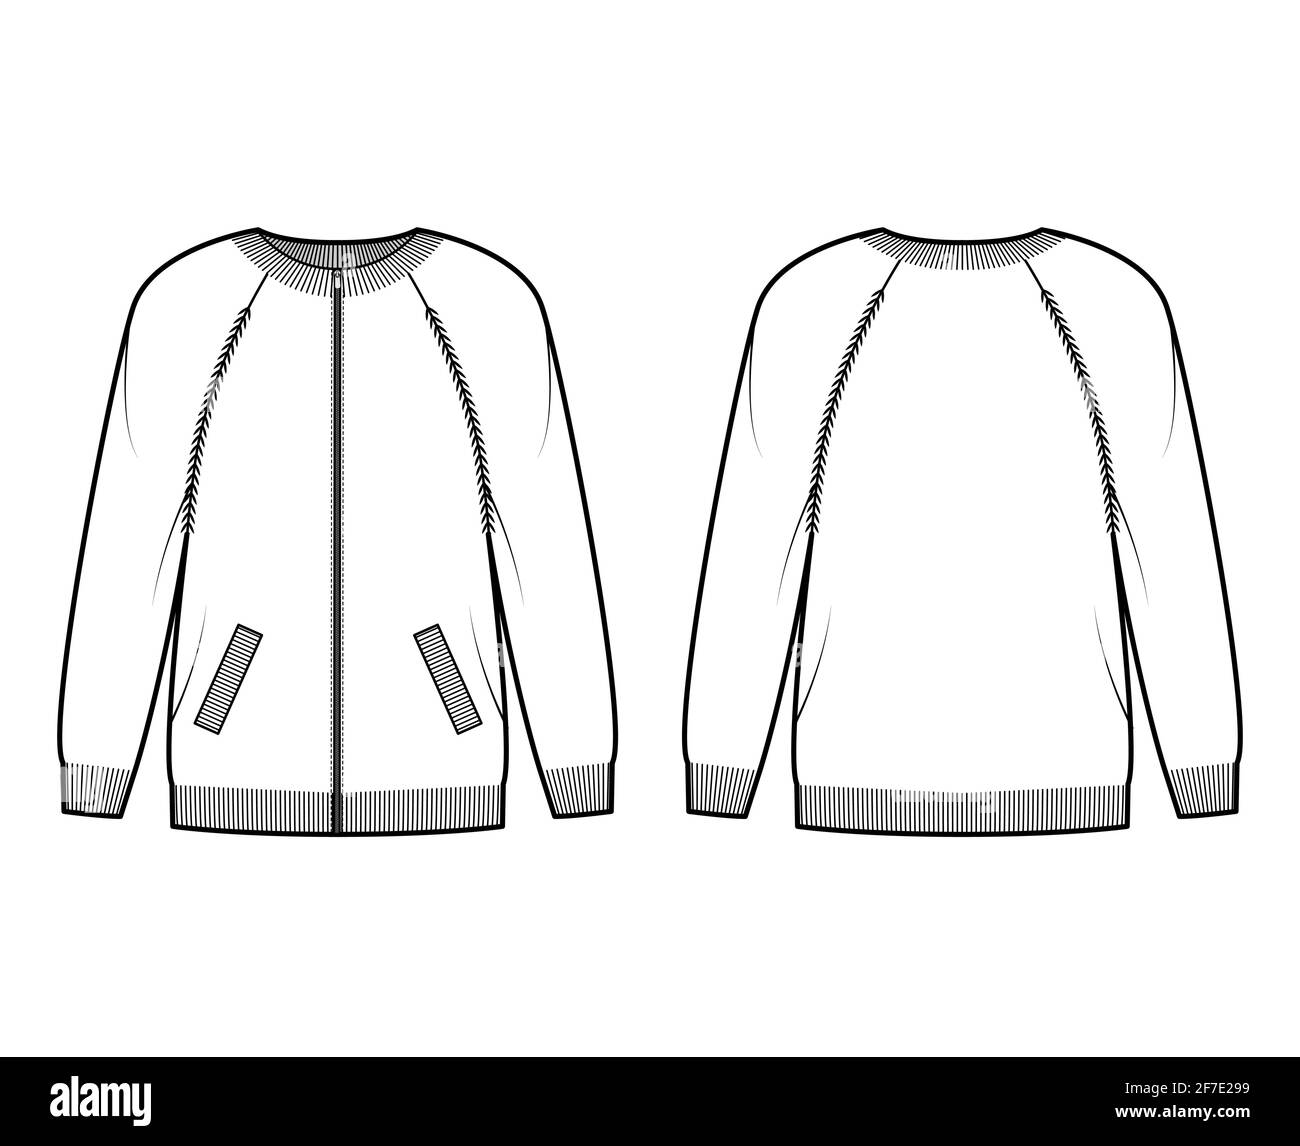 Zip-up cardigan Sweater technical fashion illustration with rib crew ...